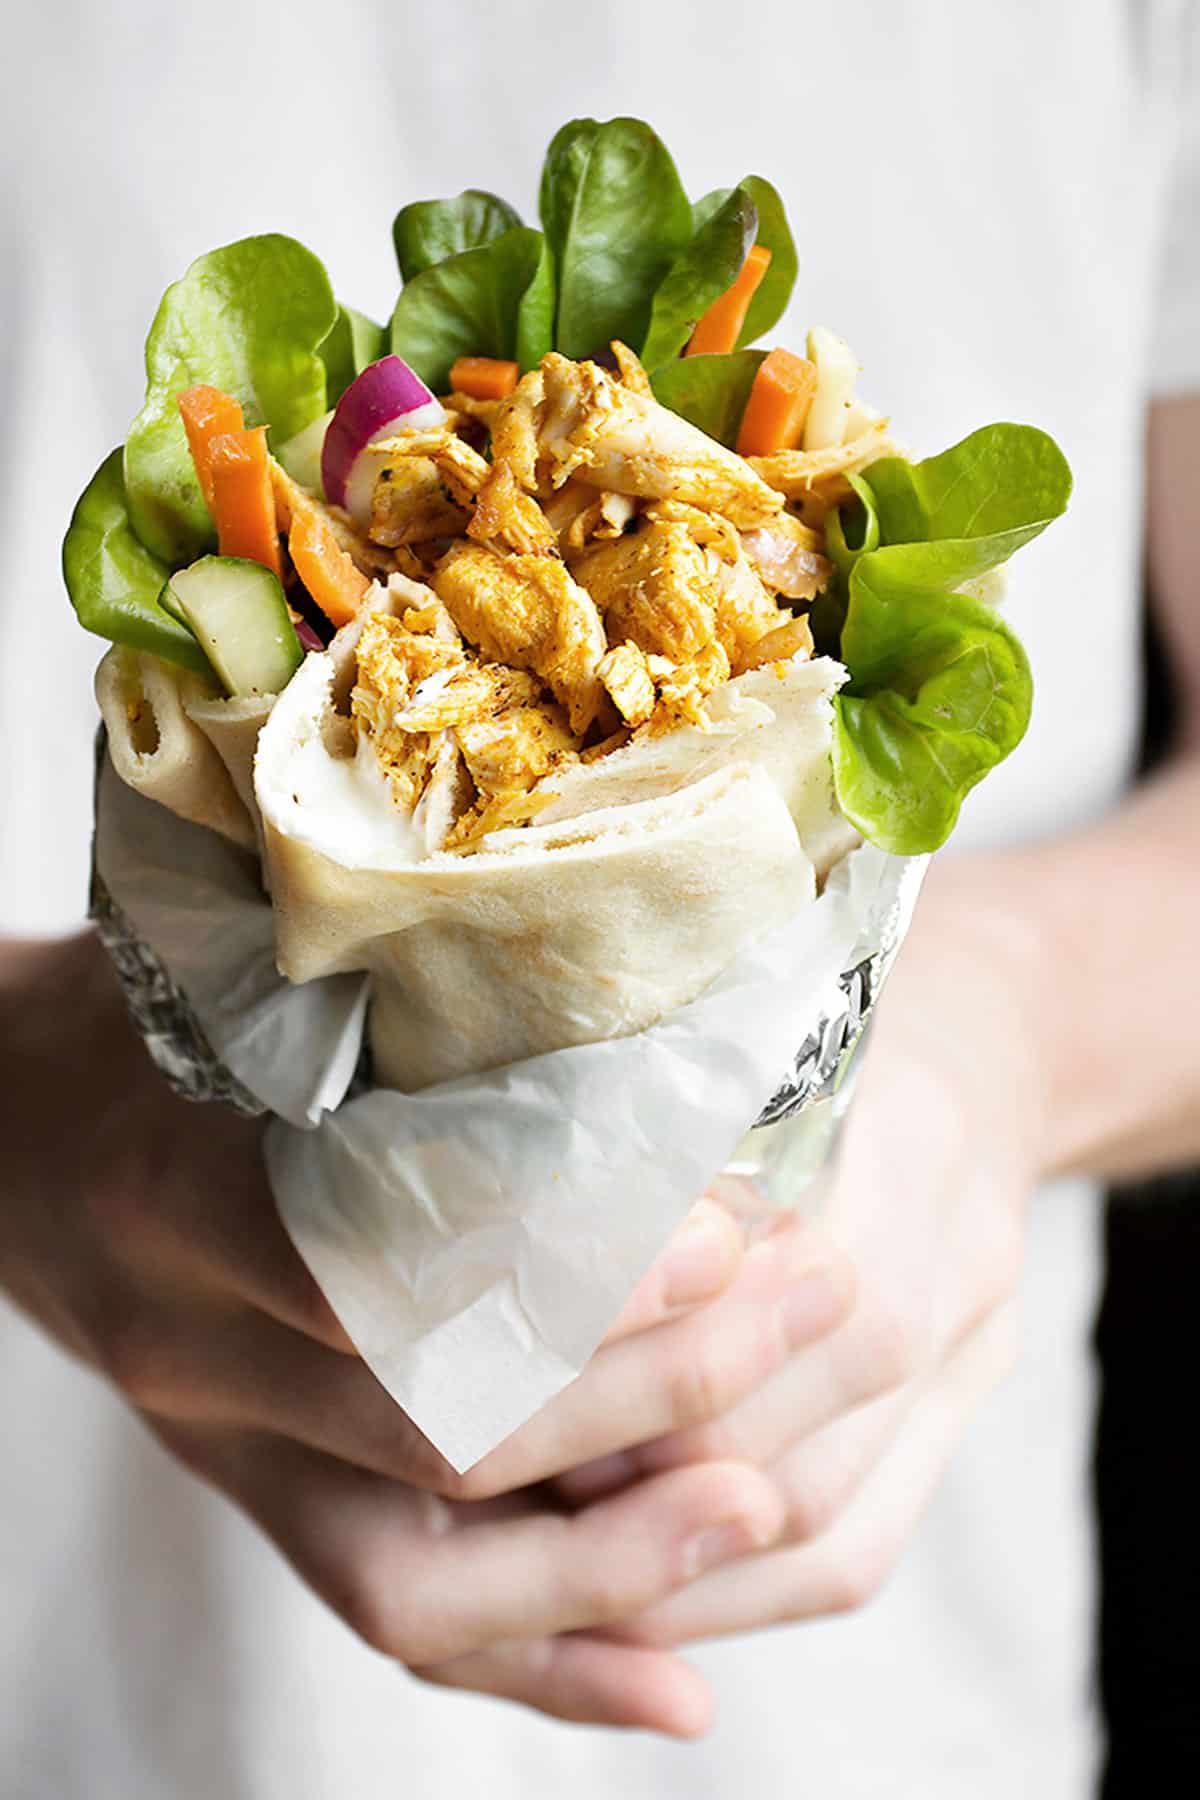 shawarma wrap held in hands